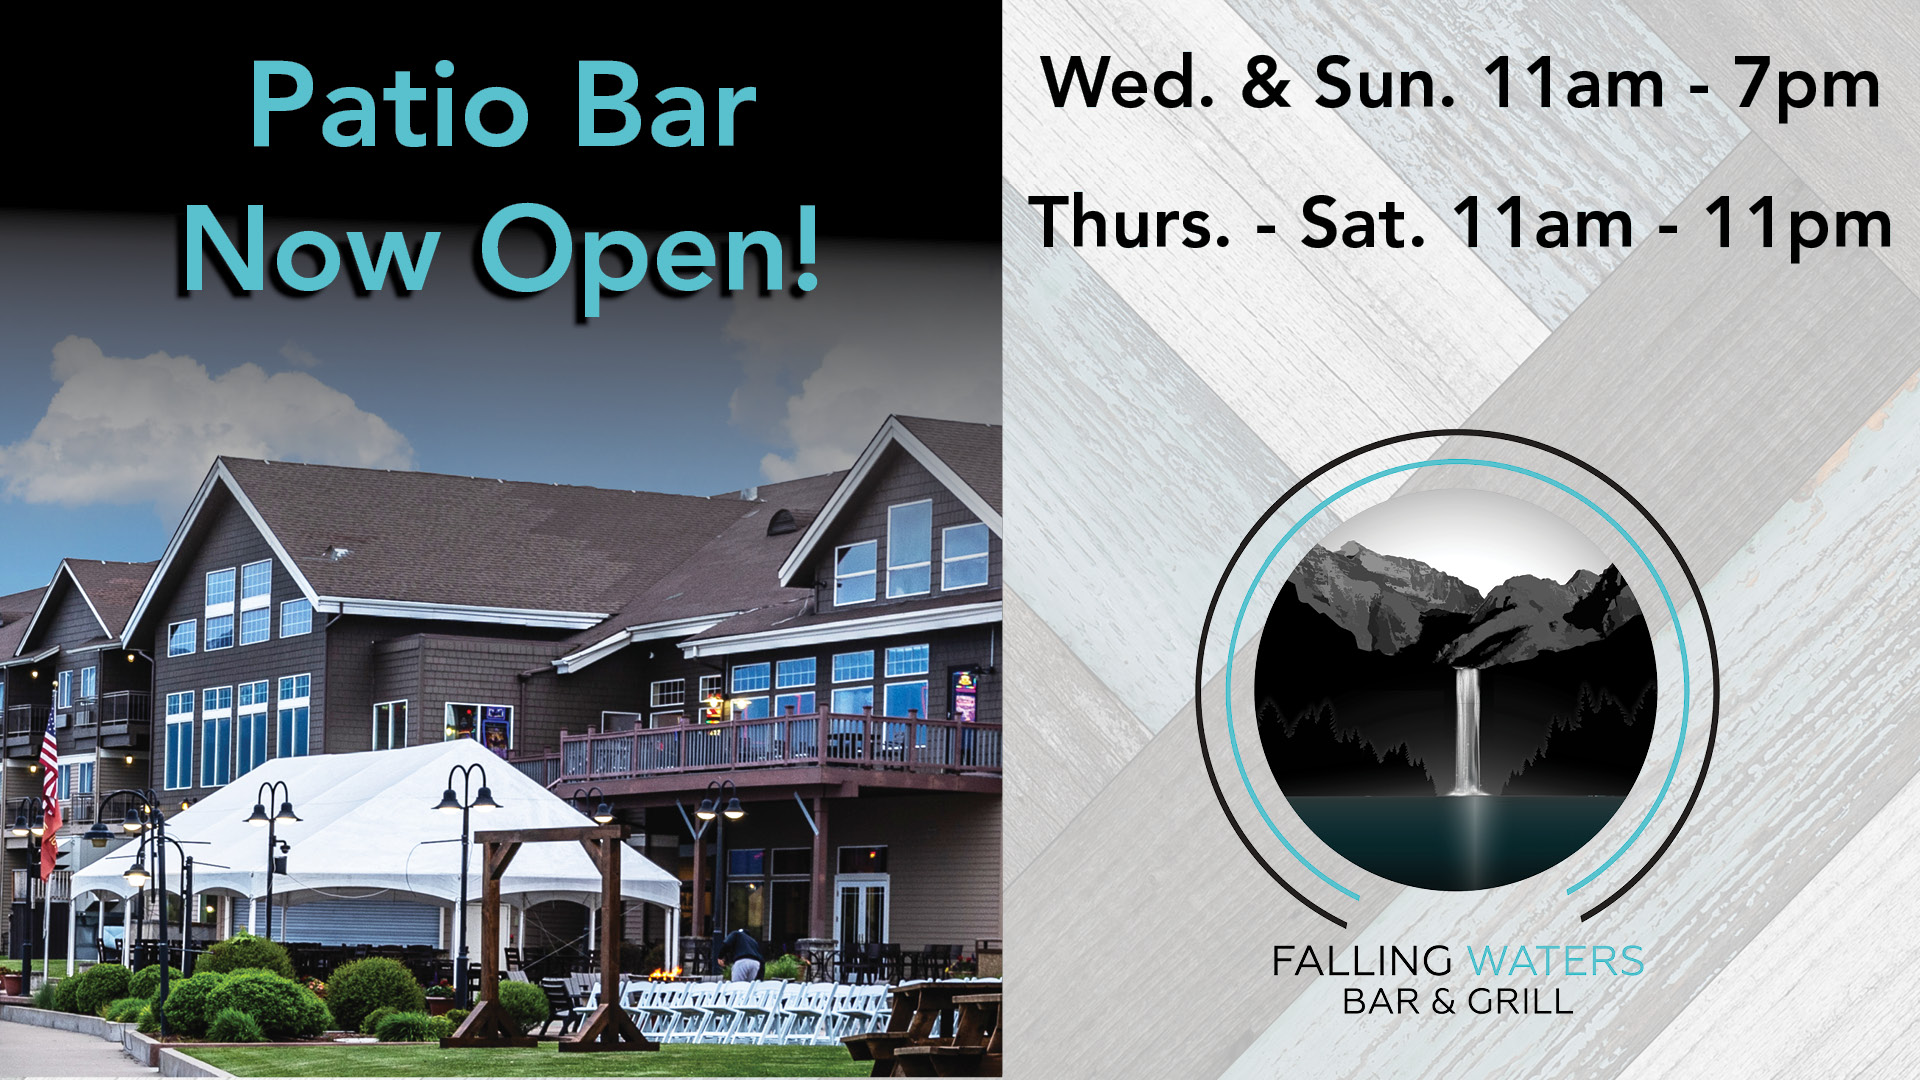 Patio bar, patio, patio events, outdoor bar at kwataqnuk, patio bar on flathead lake